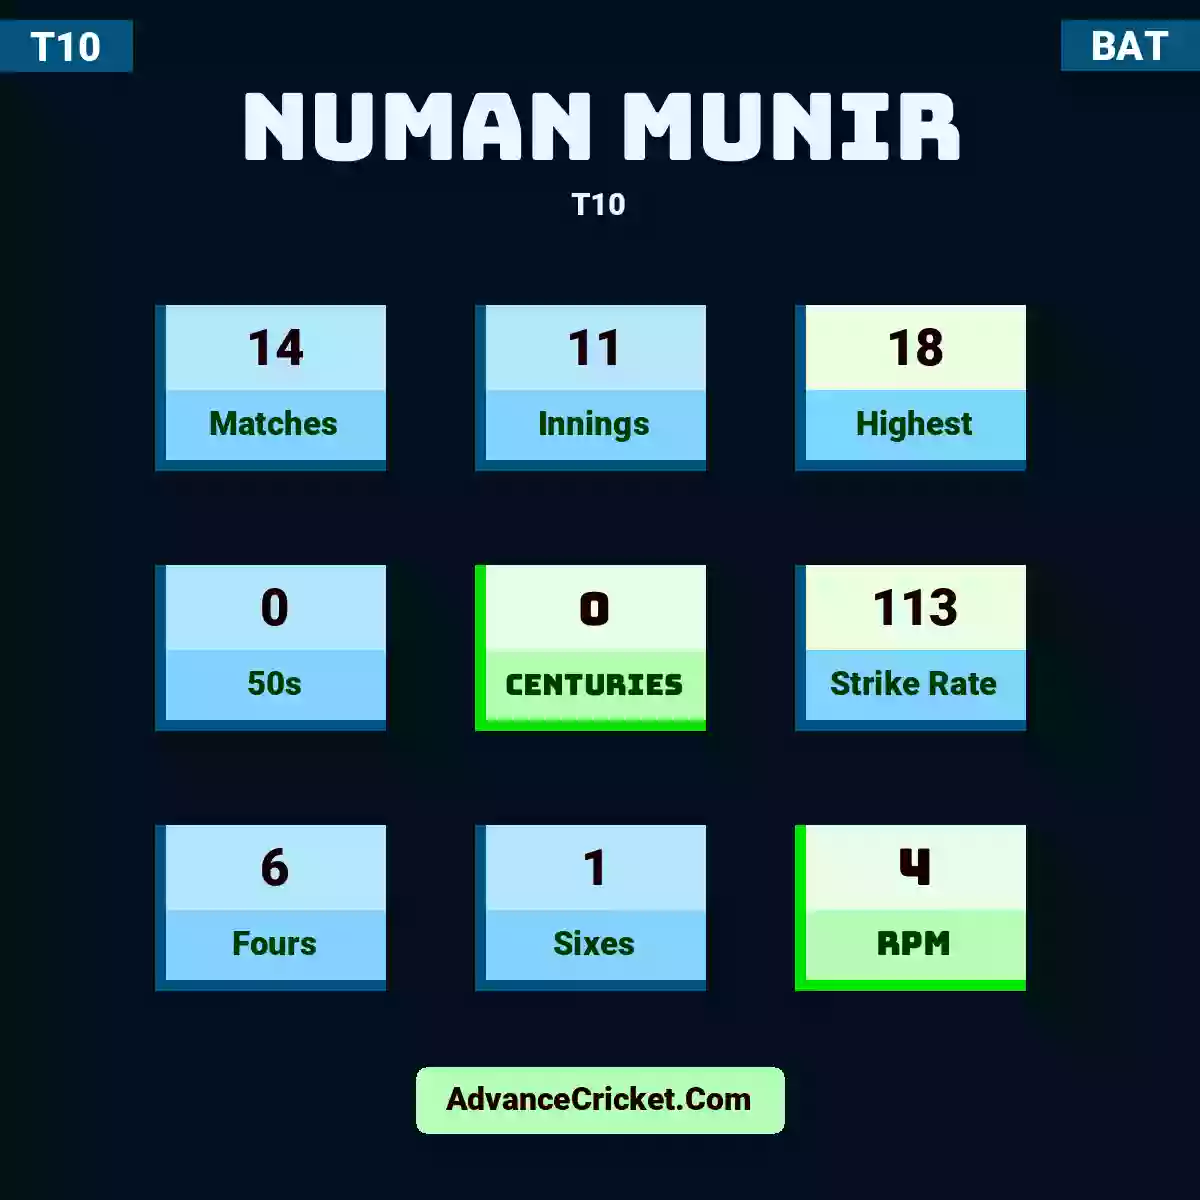 Numan Munir T10 , Numan Munir played 14 matches, scored 18 runs as highest, 0 half-centuries, and 0 centuries, with a strike rate of 113. N.Munir hit 6 fours and 1 sixes, with an RPM of 4.